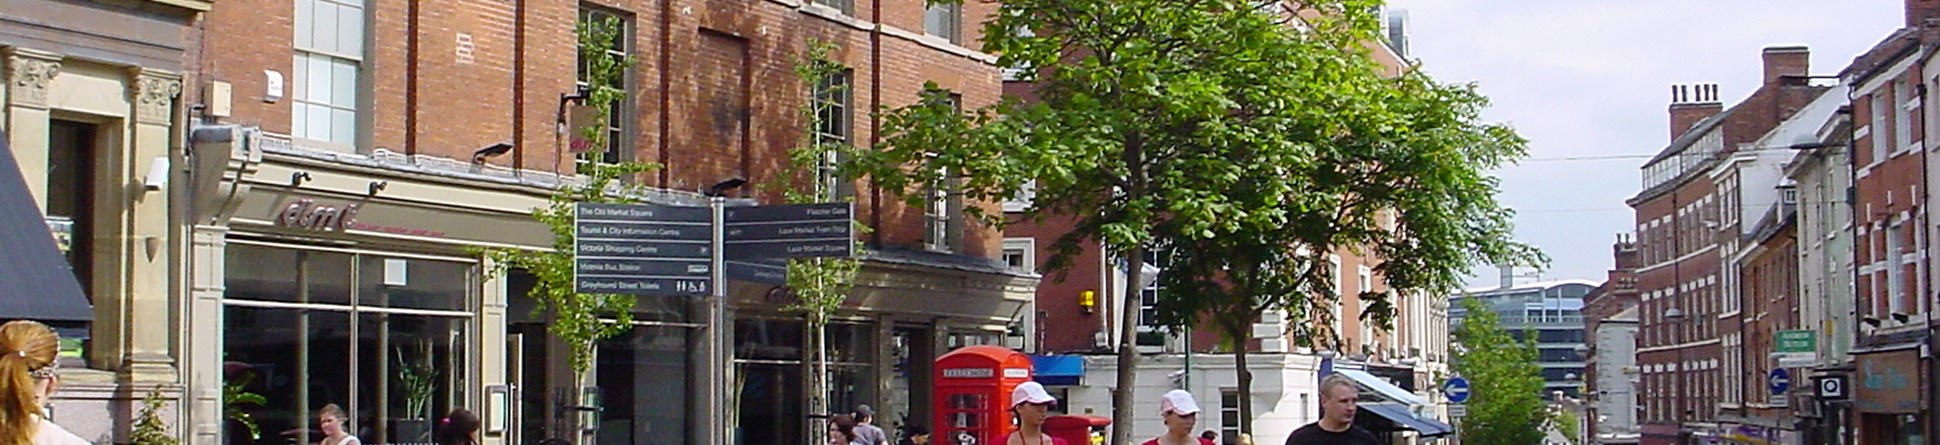 Street scene of Nottingham's Lace Market